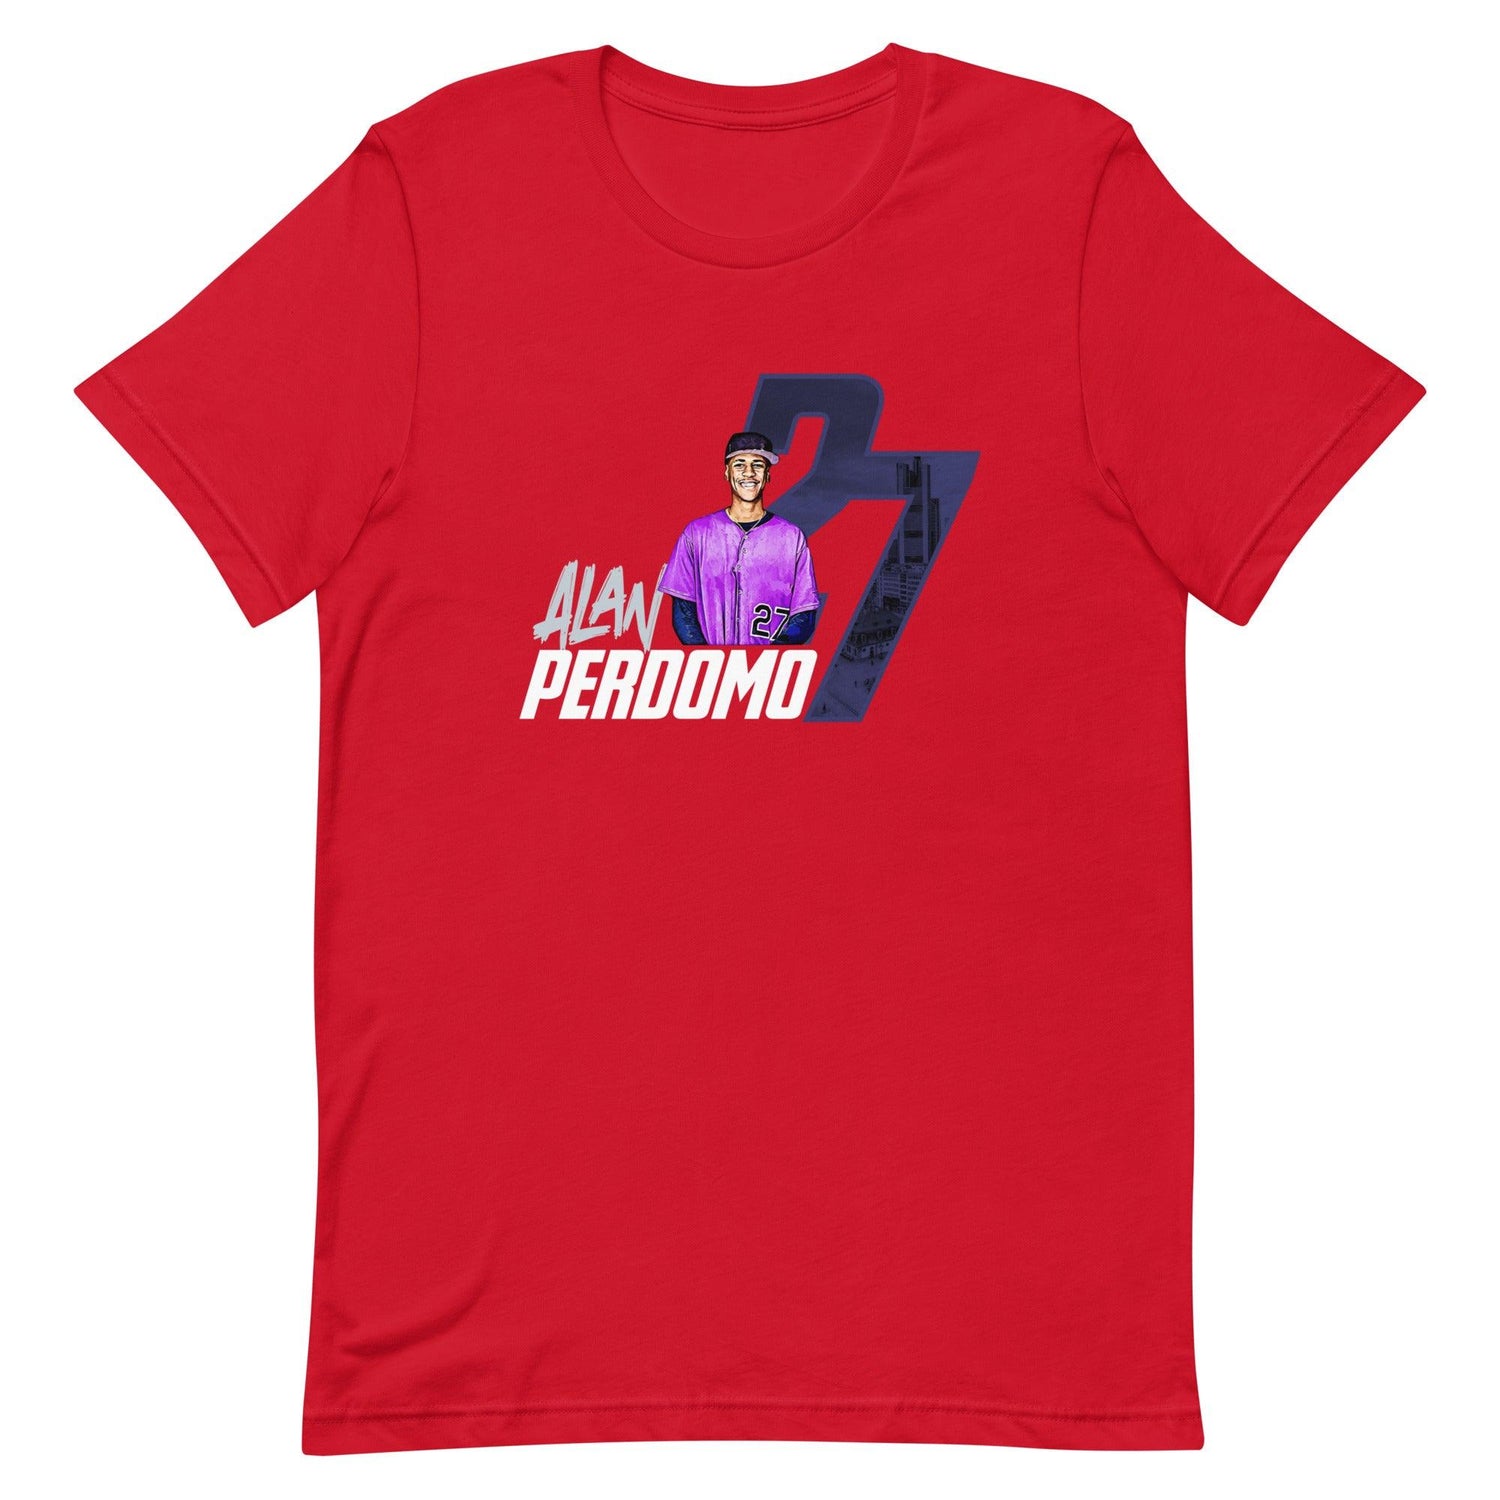 Alan Perdomo "Gameday" t-shirt - Fan Arch